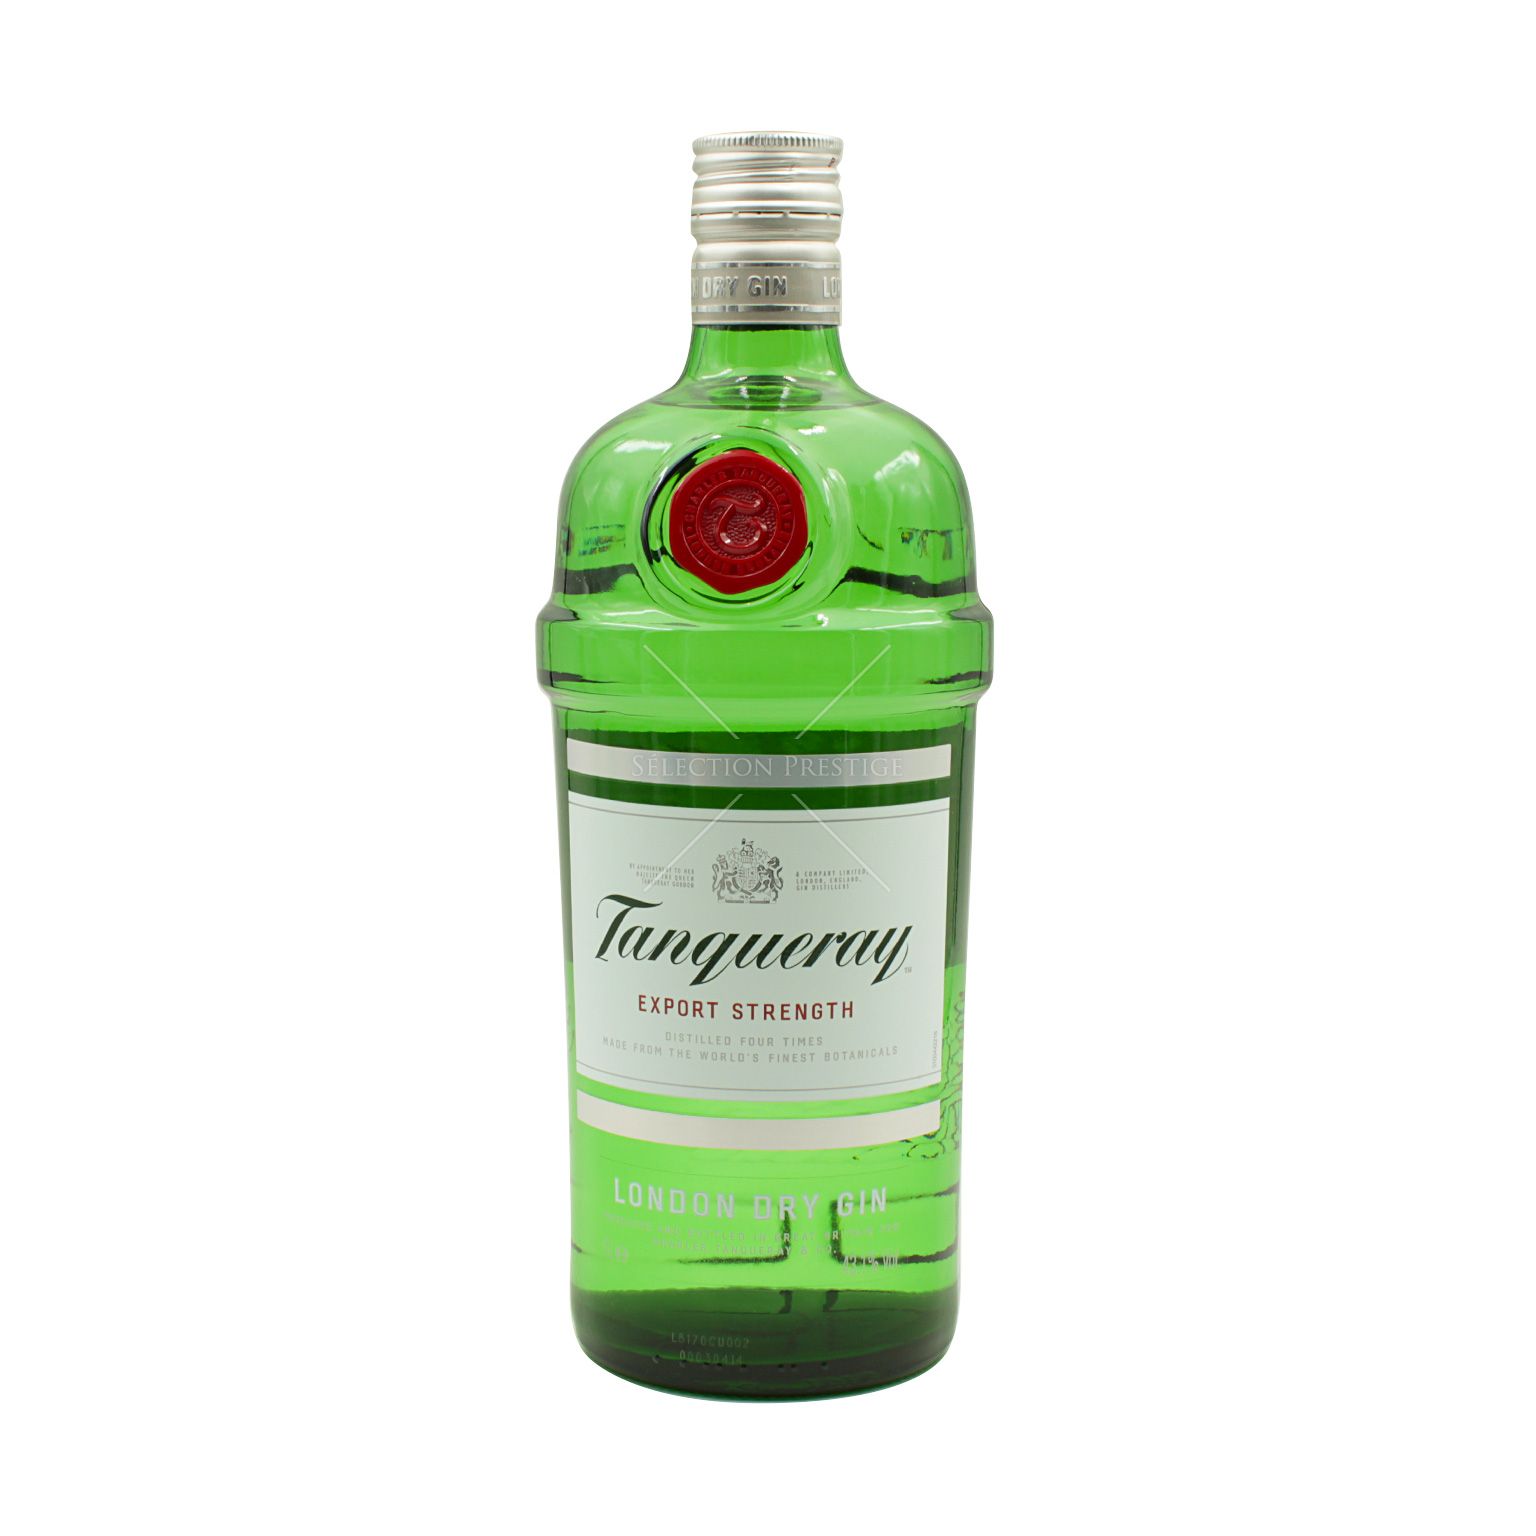 Tanqueray Gin 700ml, 43.1% ABV